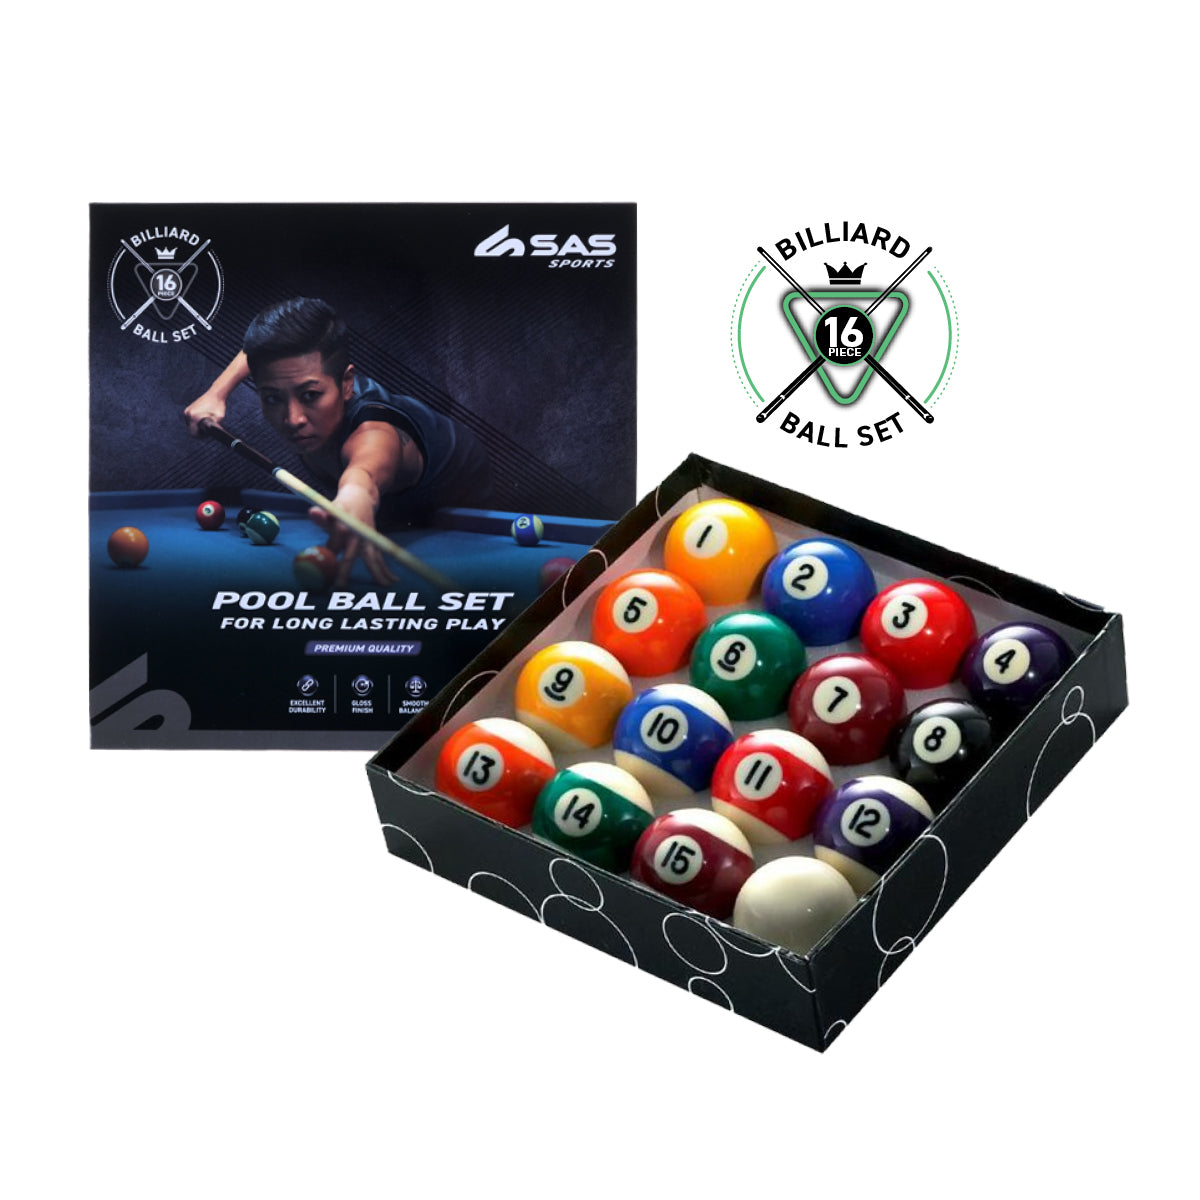 SAS Sports Pool Ball Boxed Set Premium Quality &amp; Durability Gloss Finish